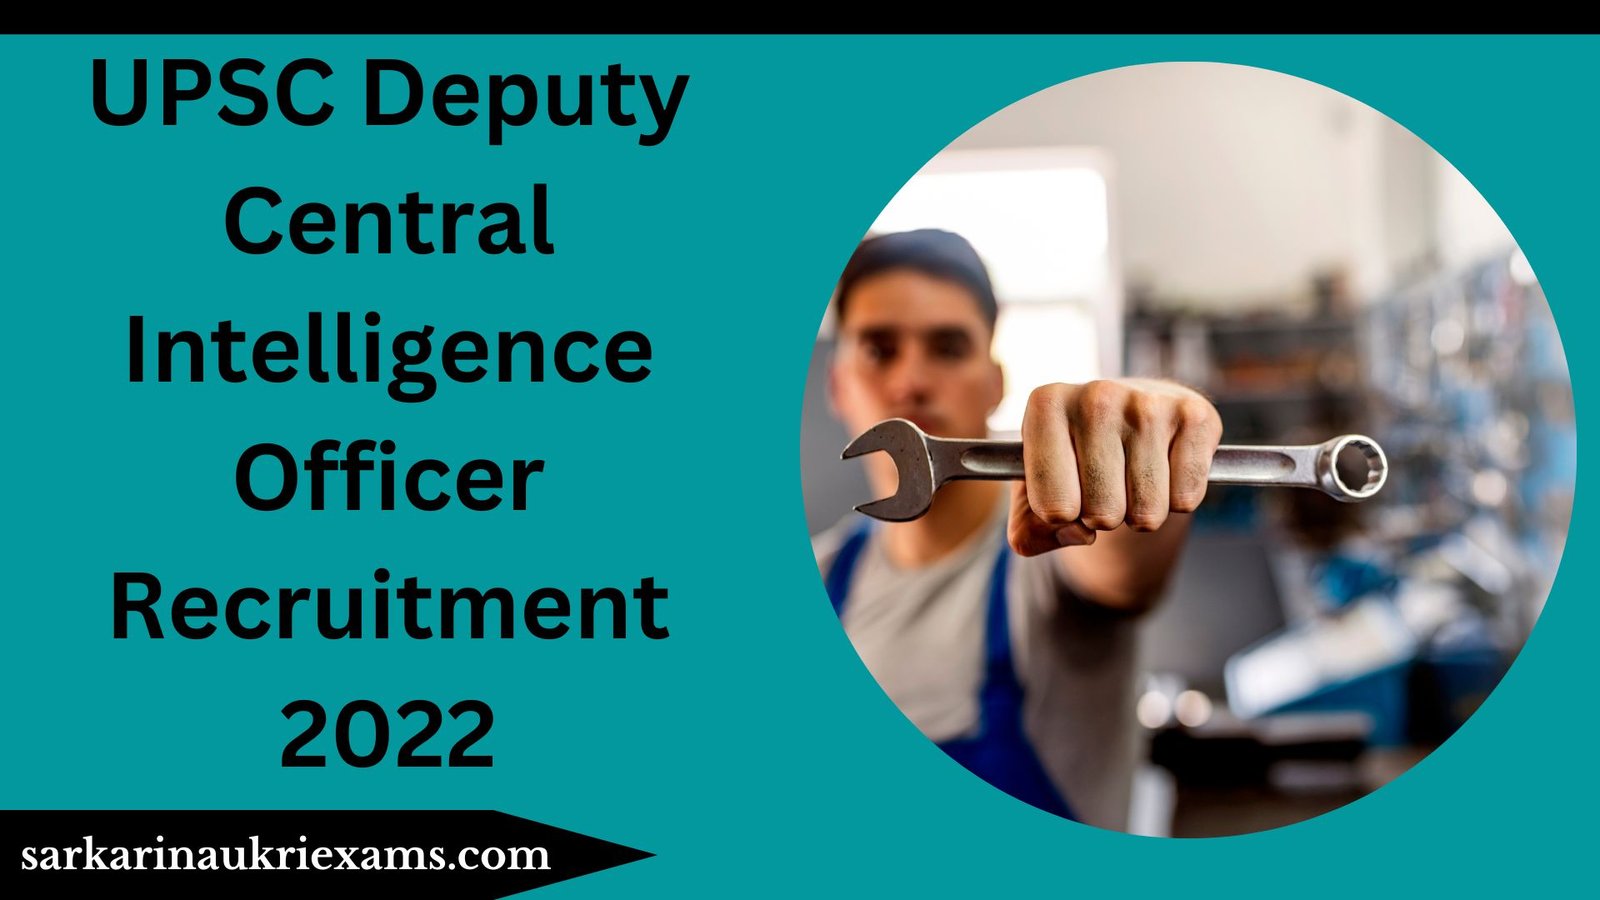 UPSC Deputy Central Intelligence Officer Recruitment 2022 | 10 post Vacancy Apply Online